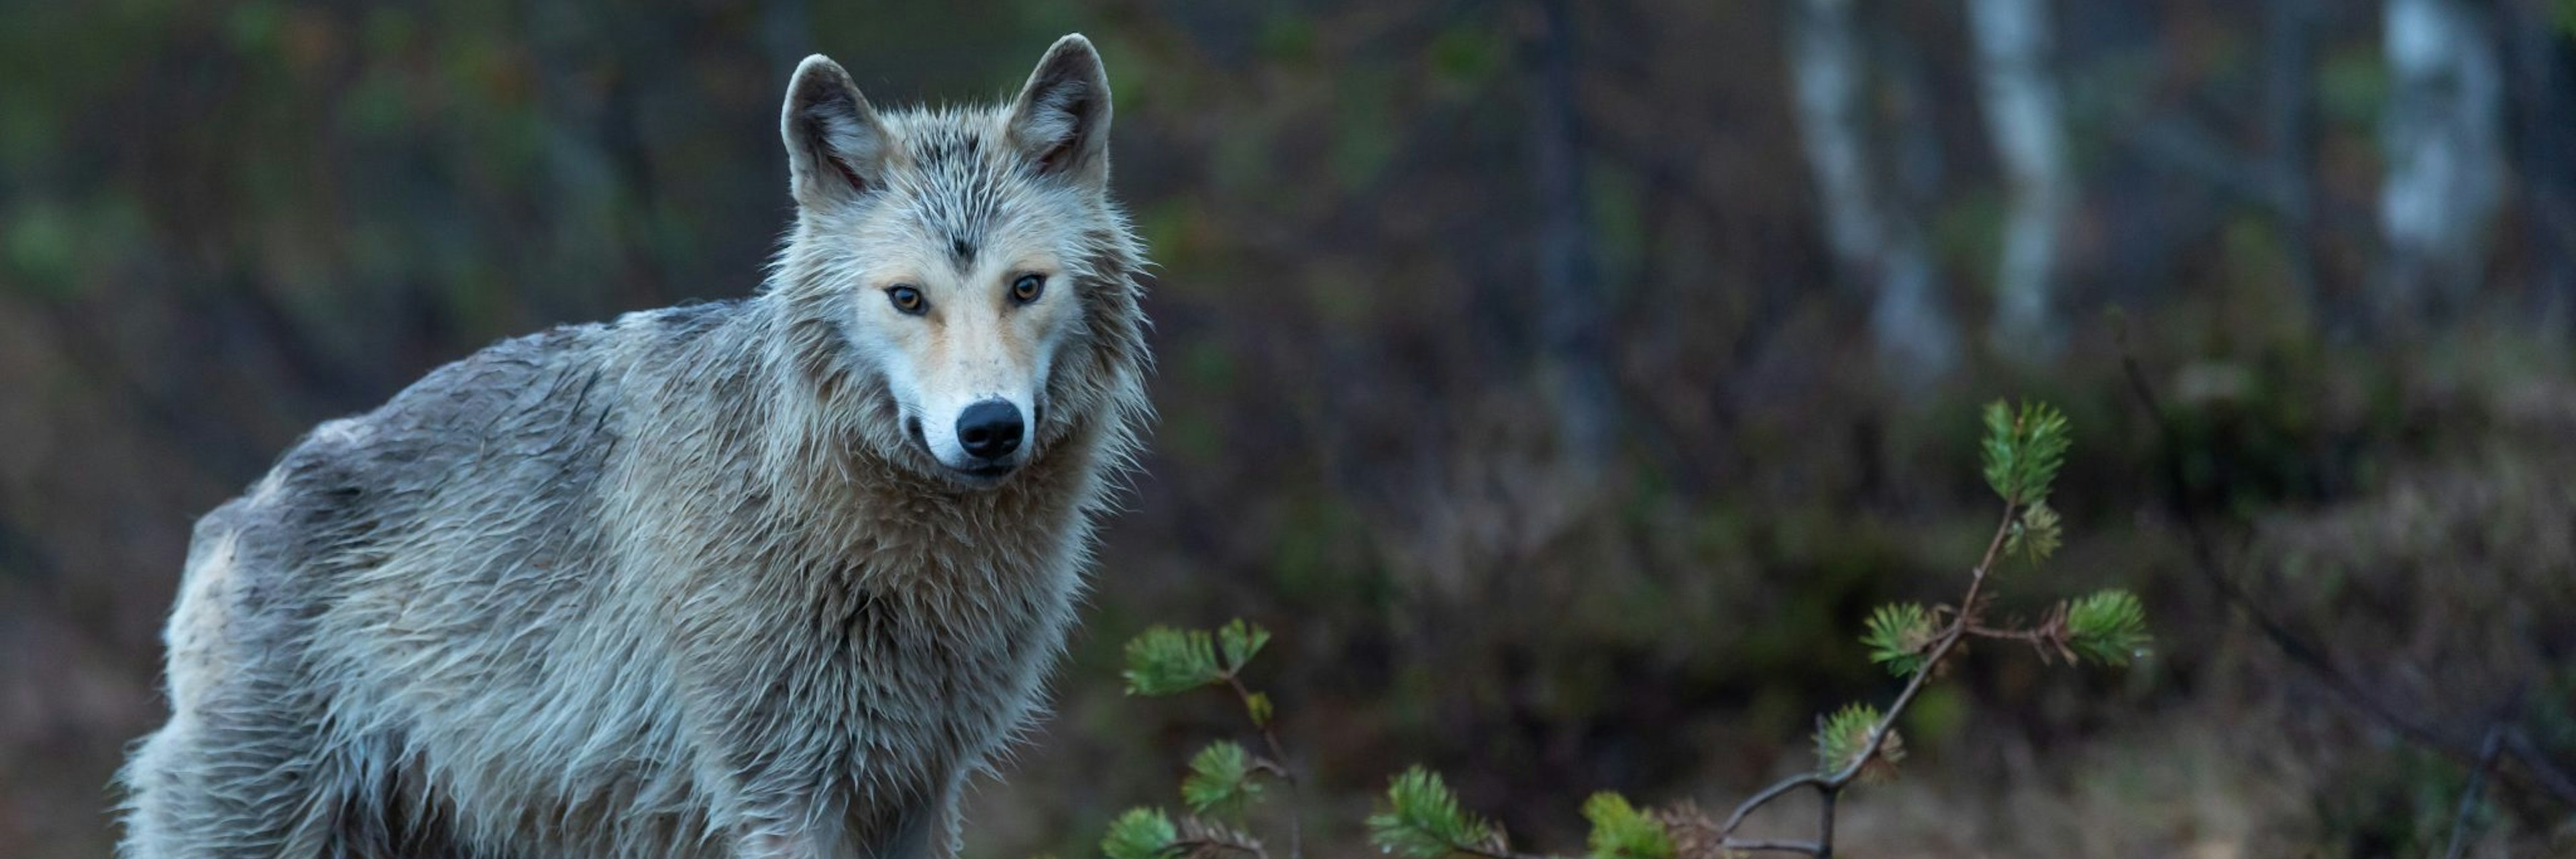 Photo of a wolf by Vincent van Zalinge on Unsplash